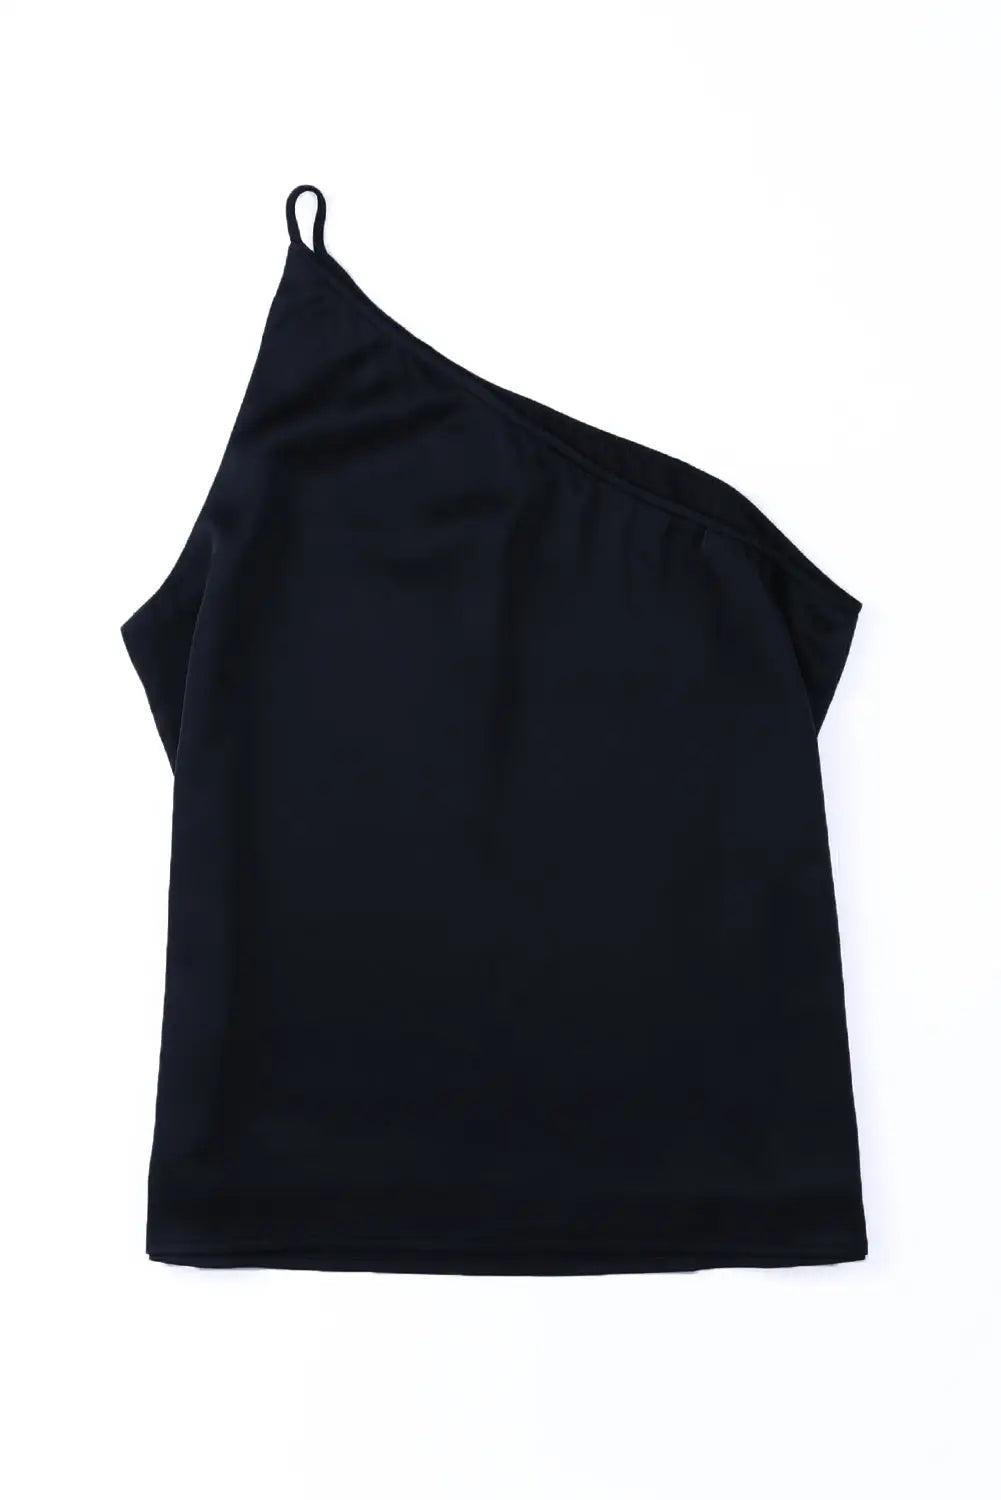 Black satin one shoulder loose tank top - tops